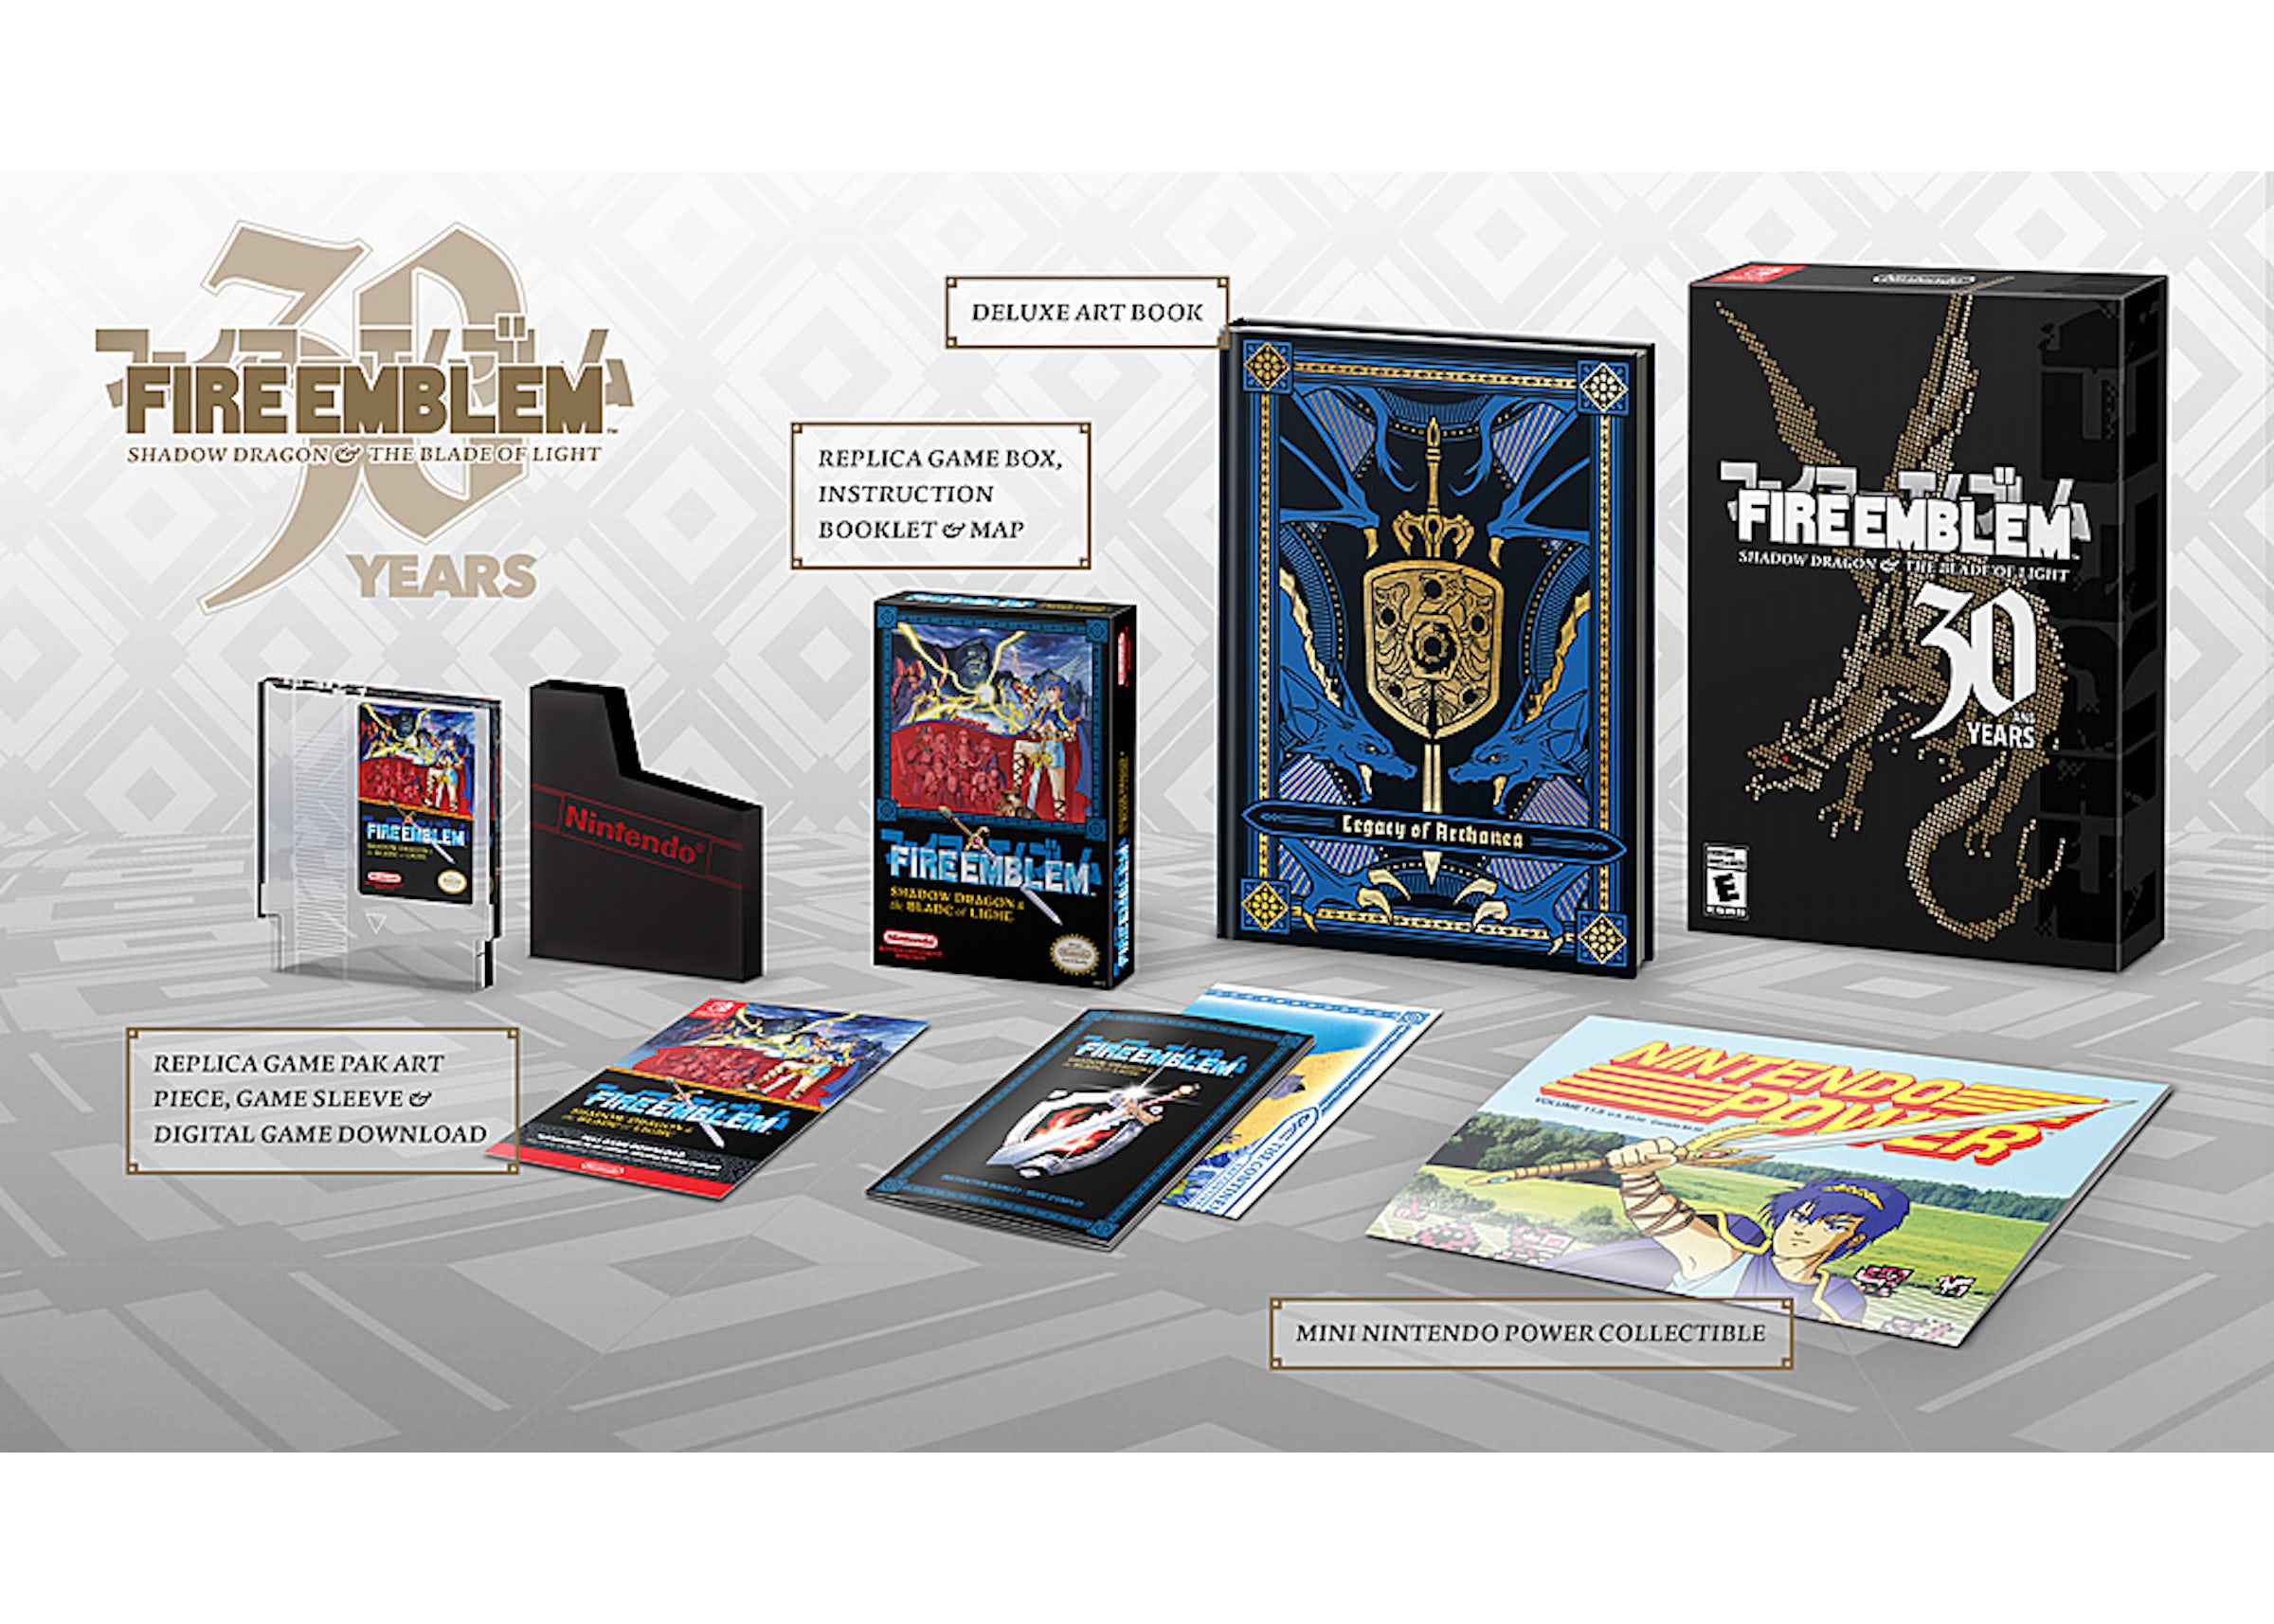 Nintendo Fire Emblem 30th Anniversary Edition Video Game Bundle - US